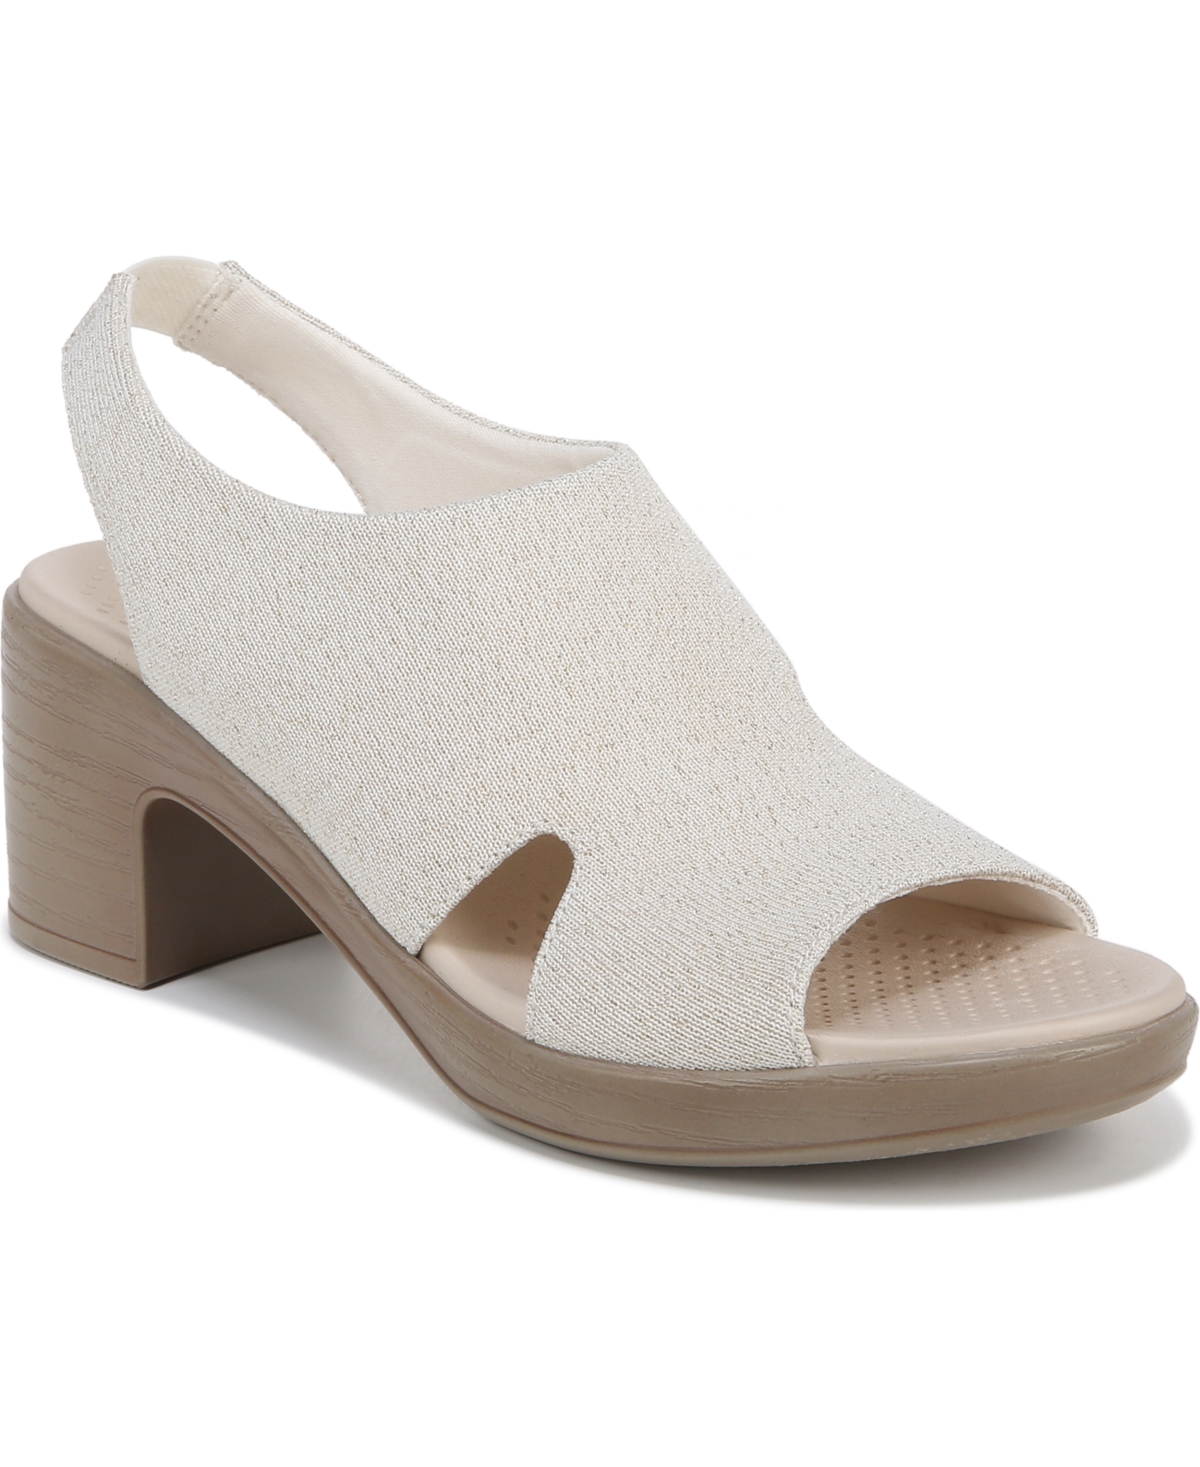 Eden Washable Strappy Sandals - White Fabric